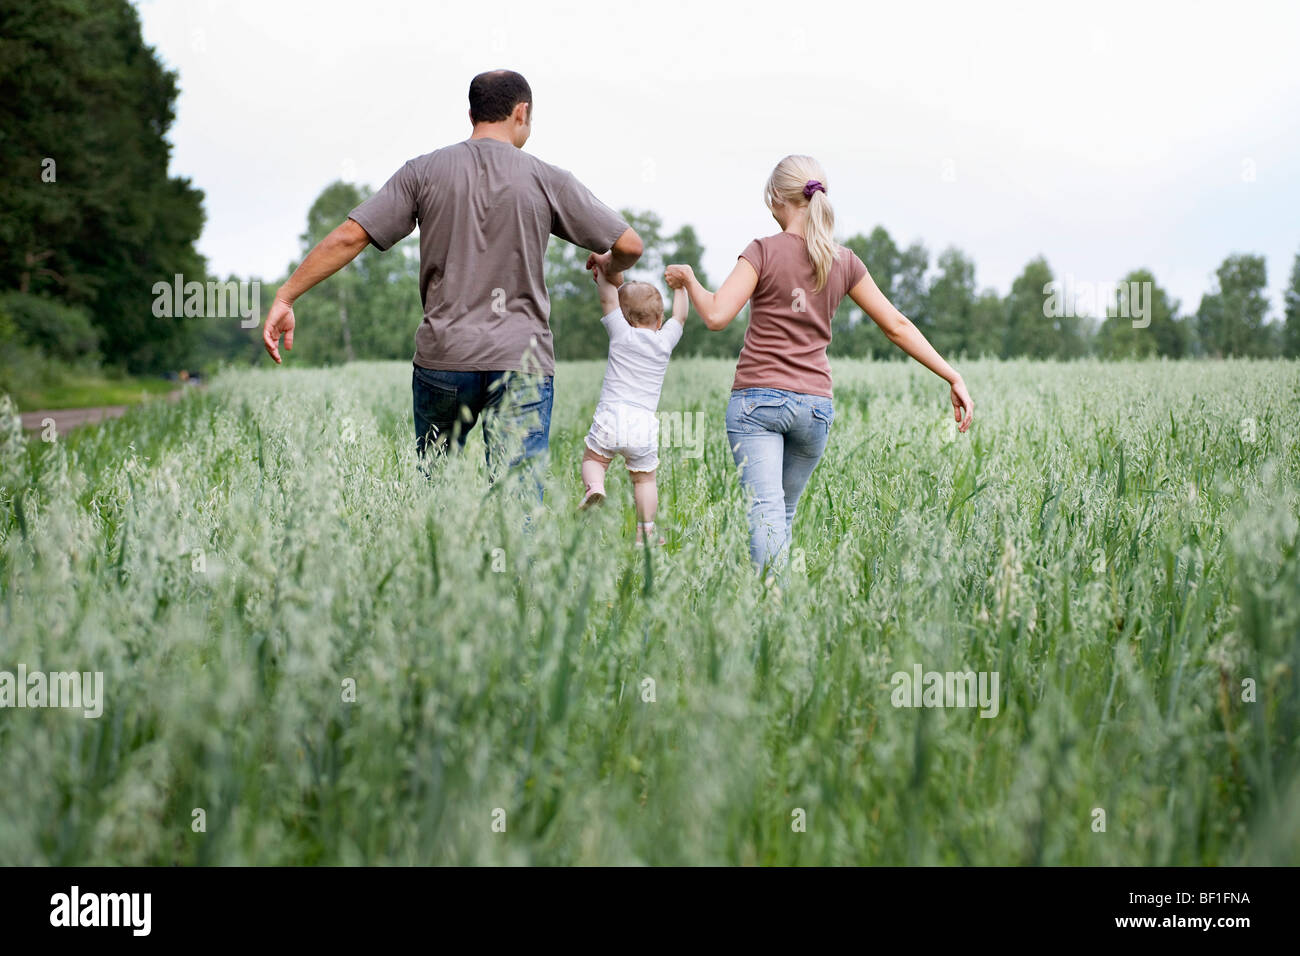 A family walking through a field Stock Photo